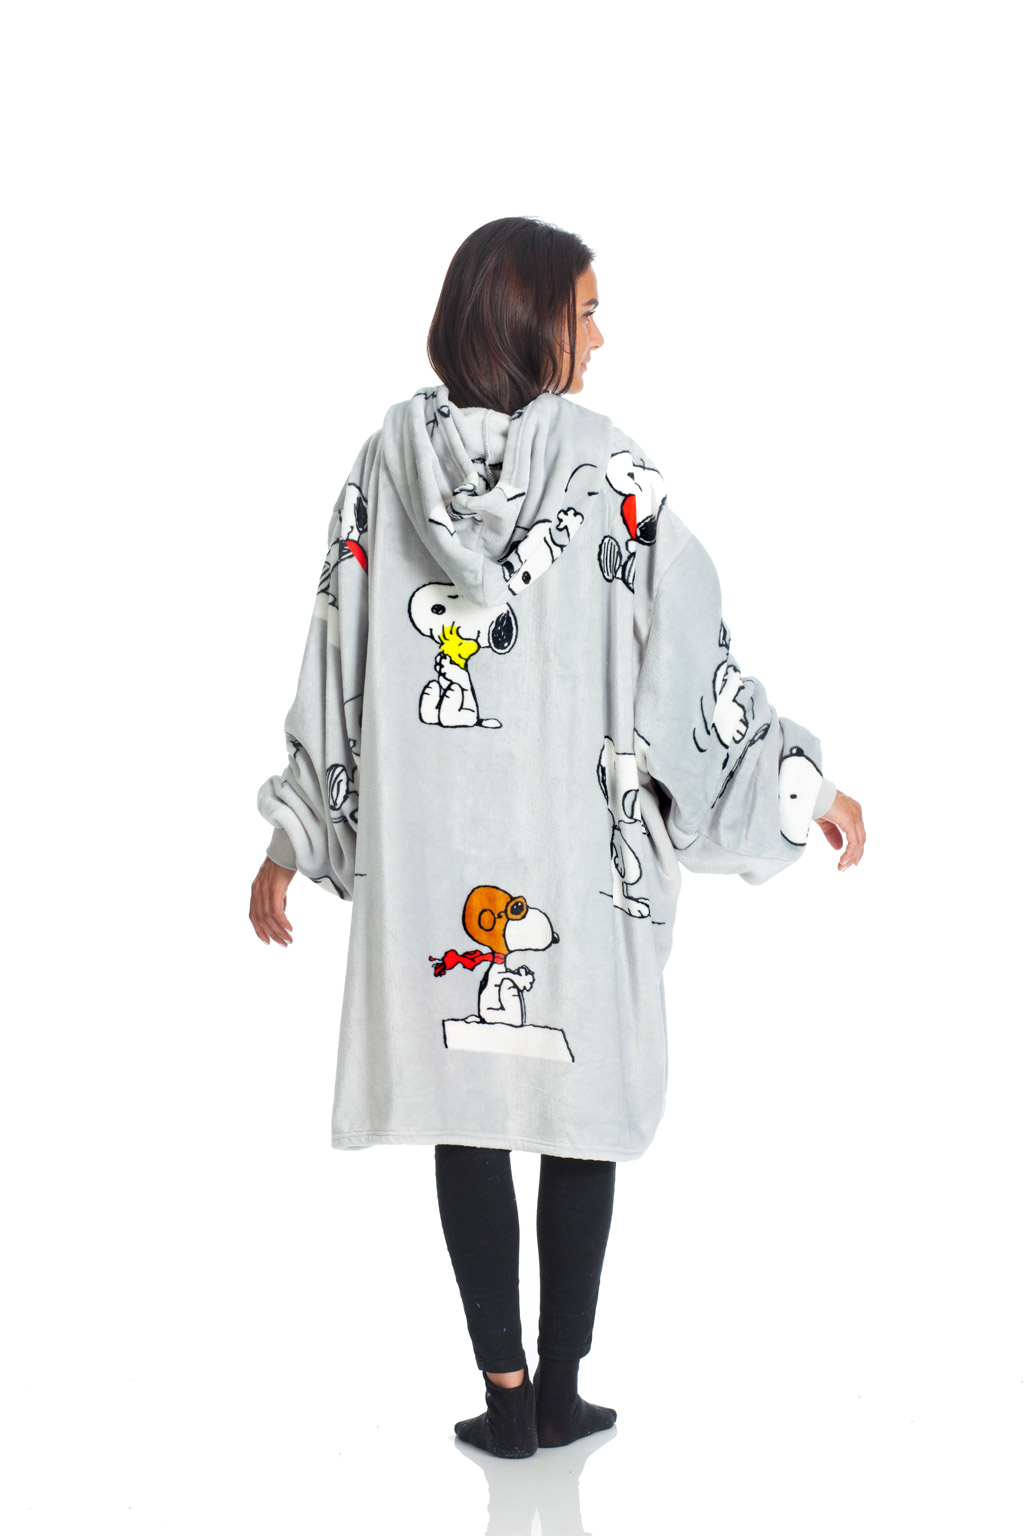 Coperta con maniche e tasca frontale Kanguru fantasia Snoopy